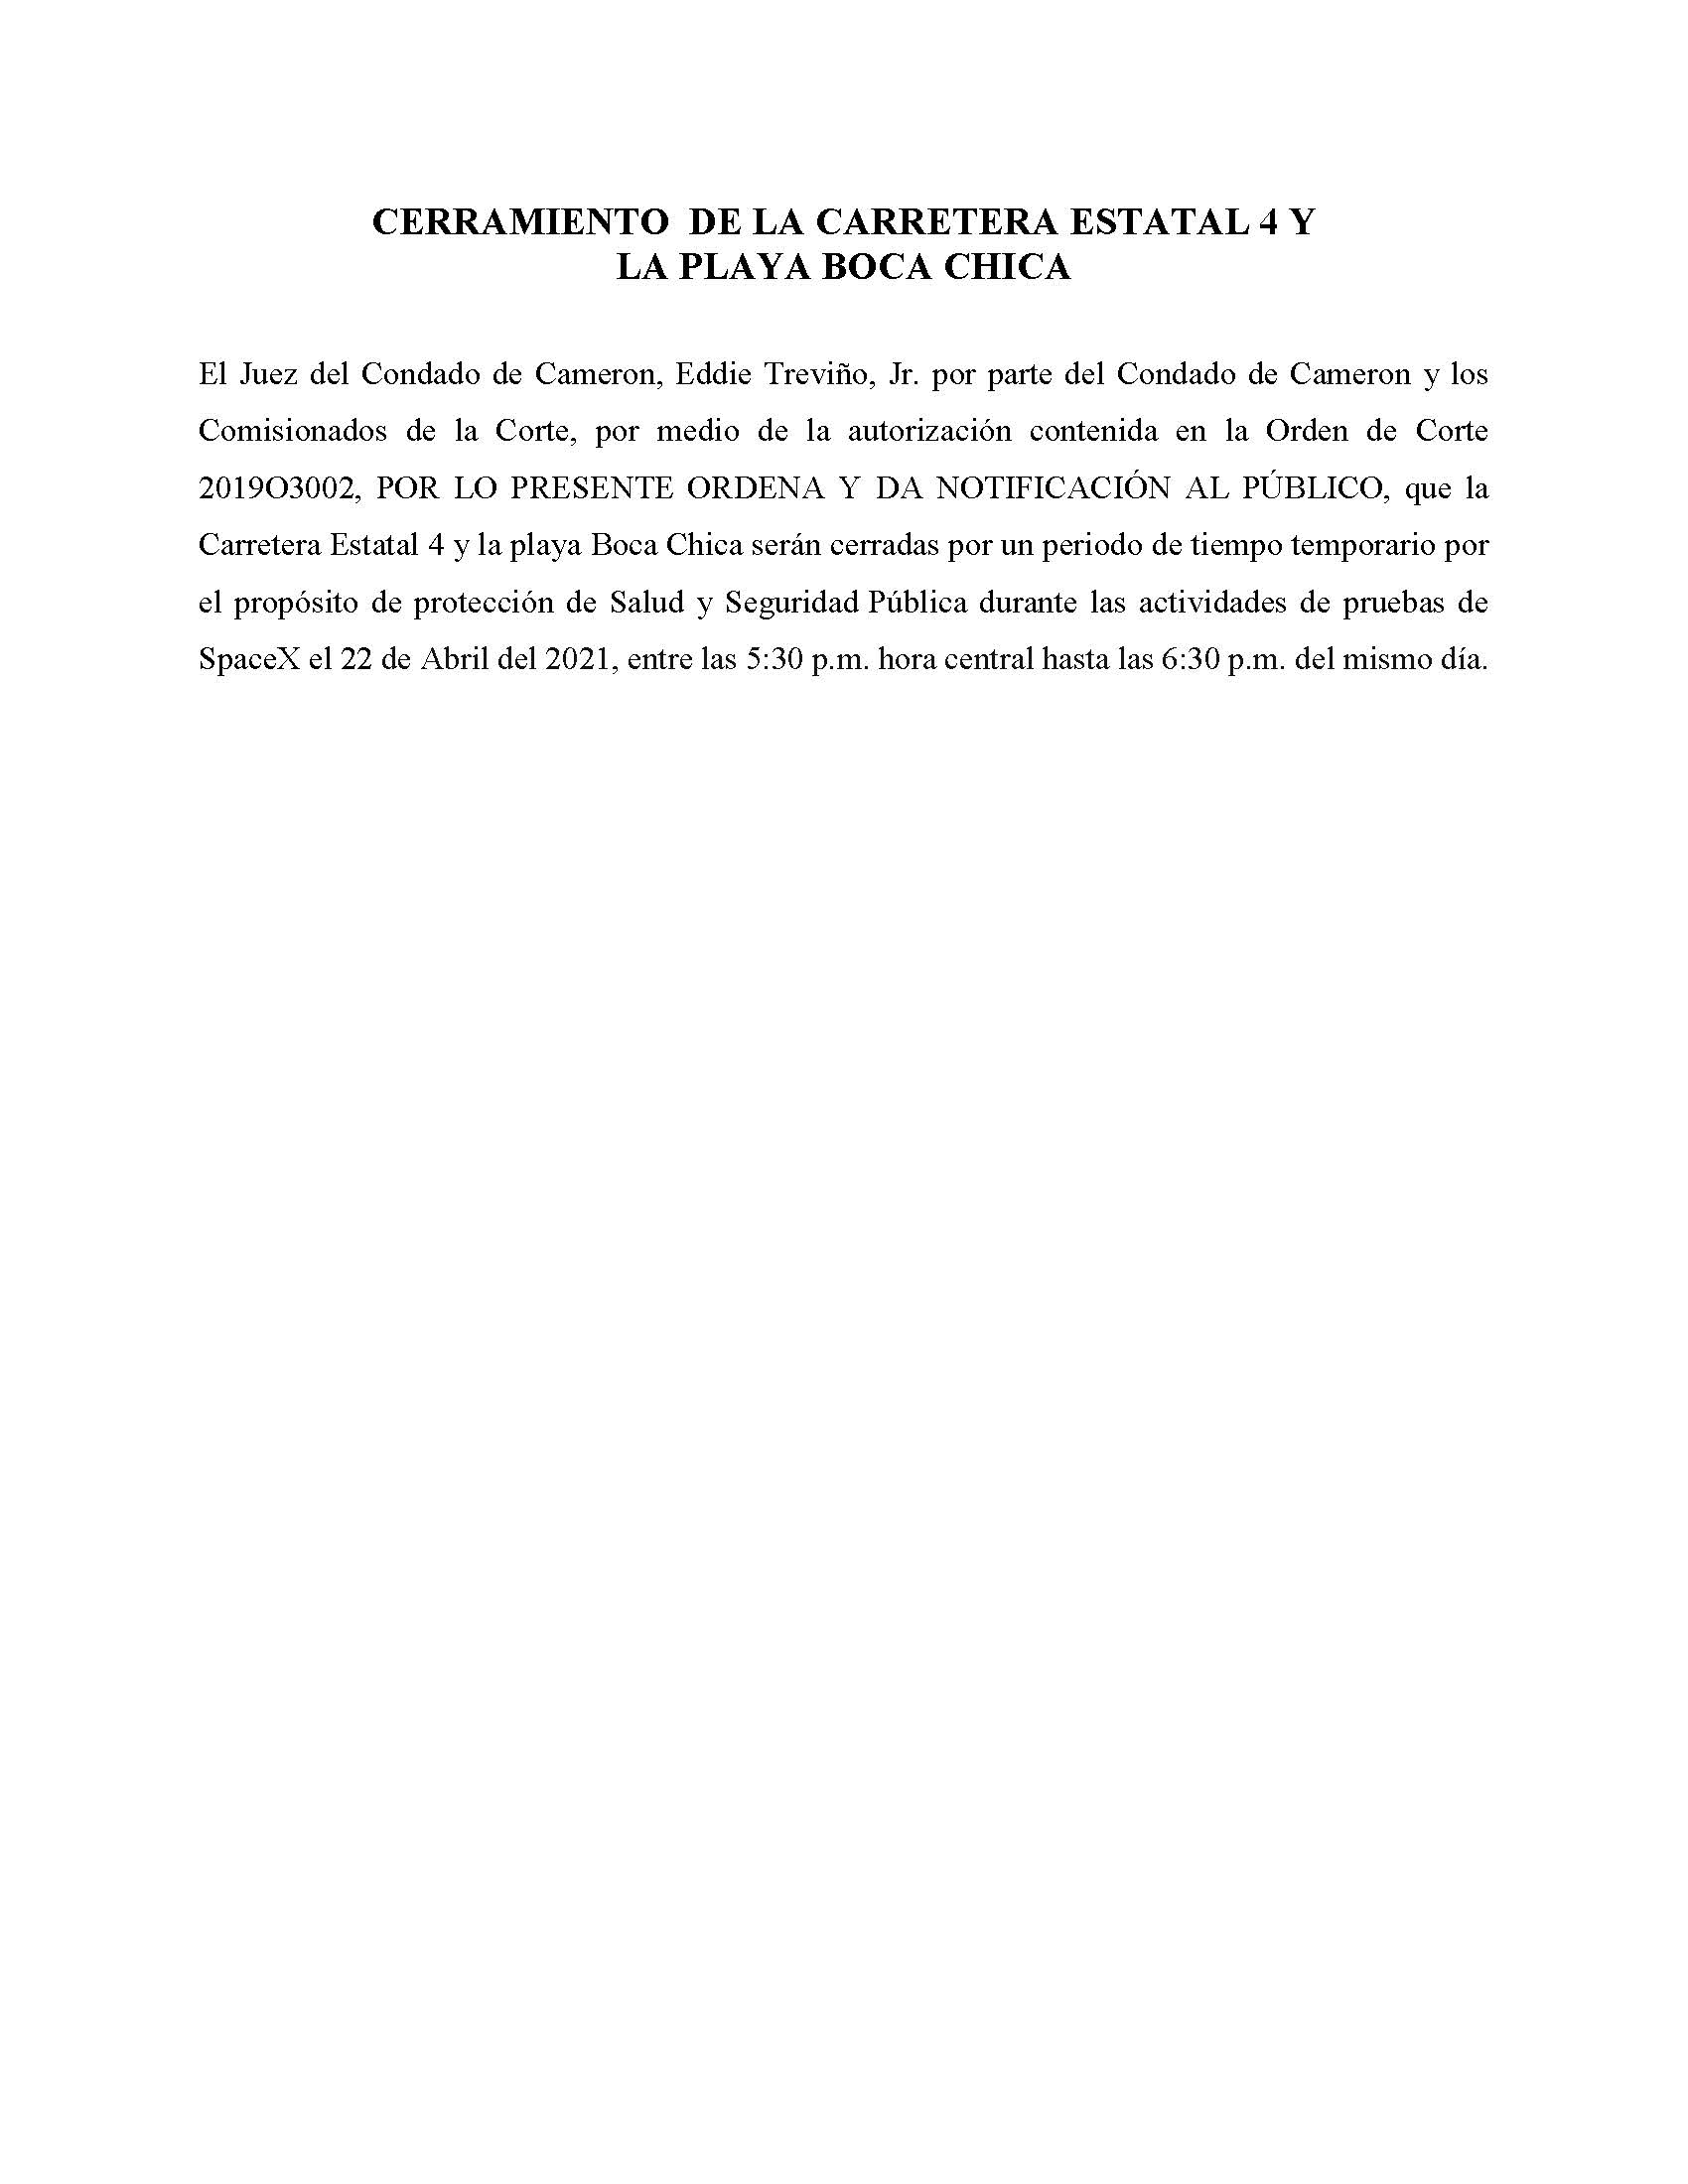 ORDER.CLOSURE OF HIGHWAY 4 Y LA PLAYA BOCA CHICA.SPANISH.04.22.2021